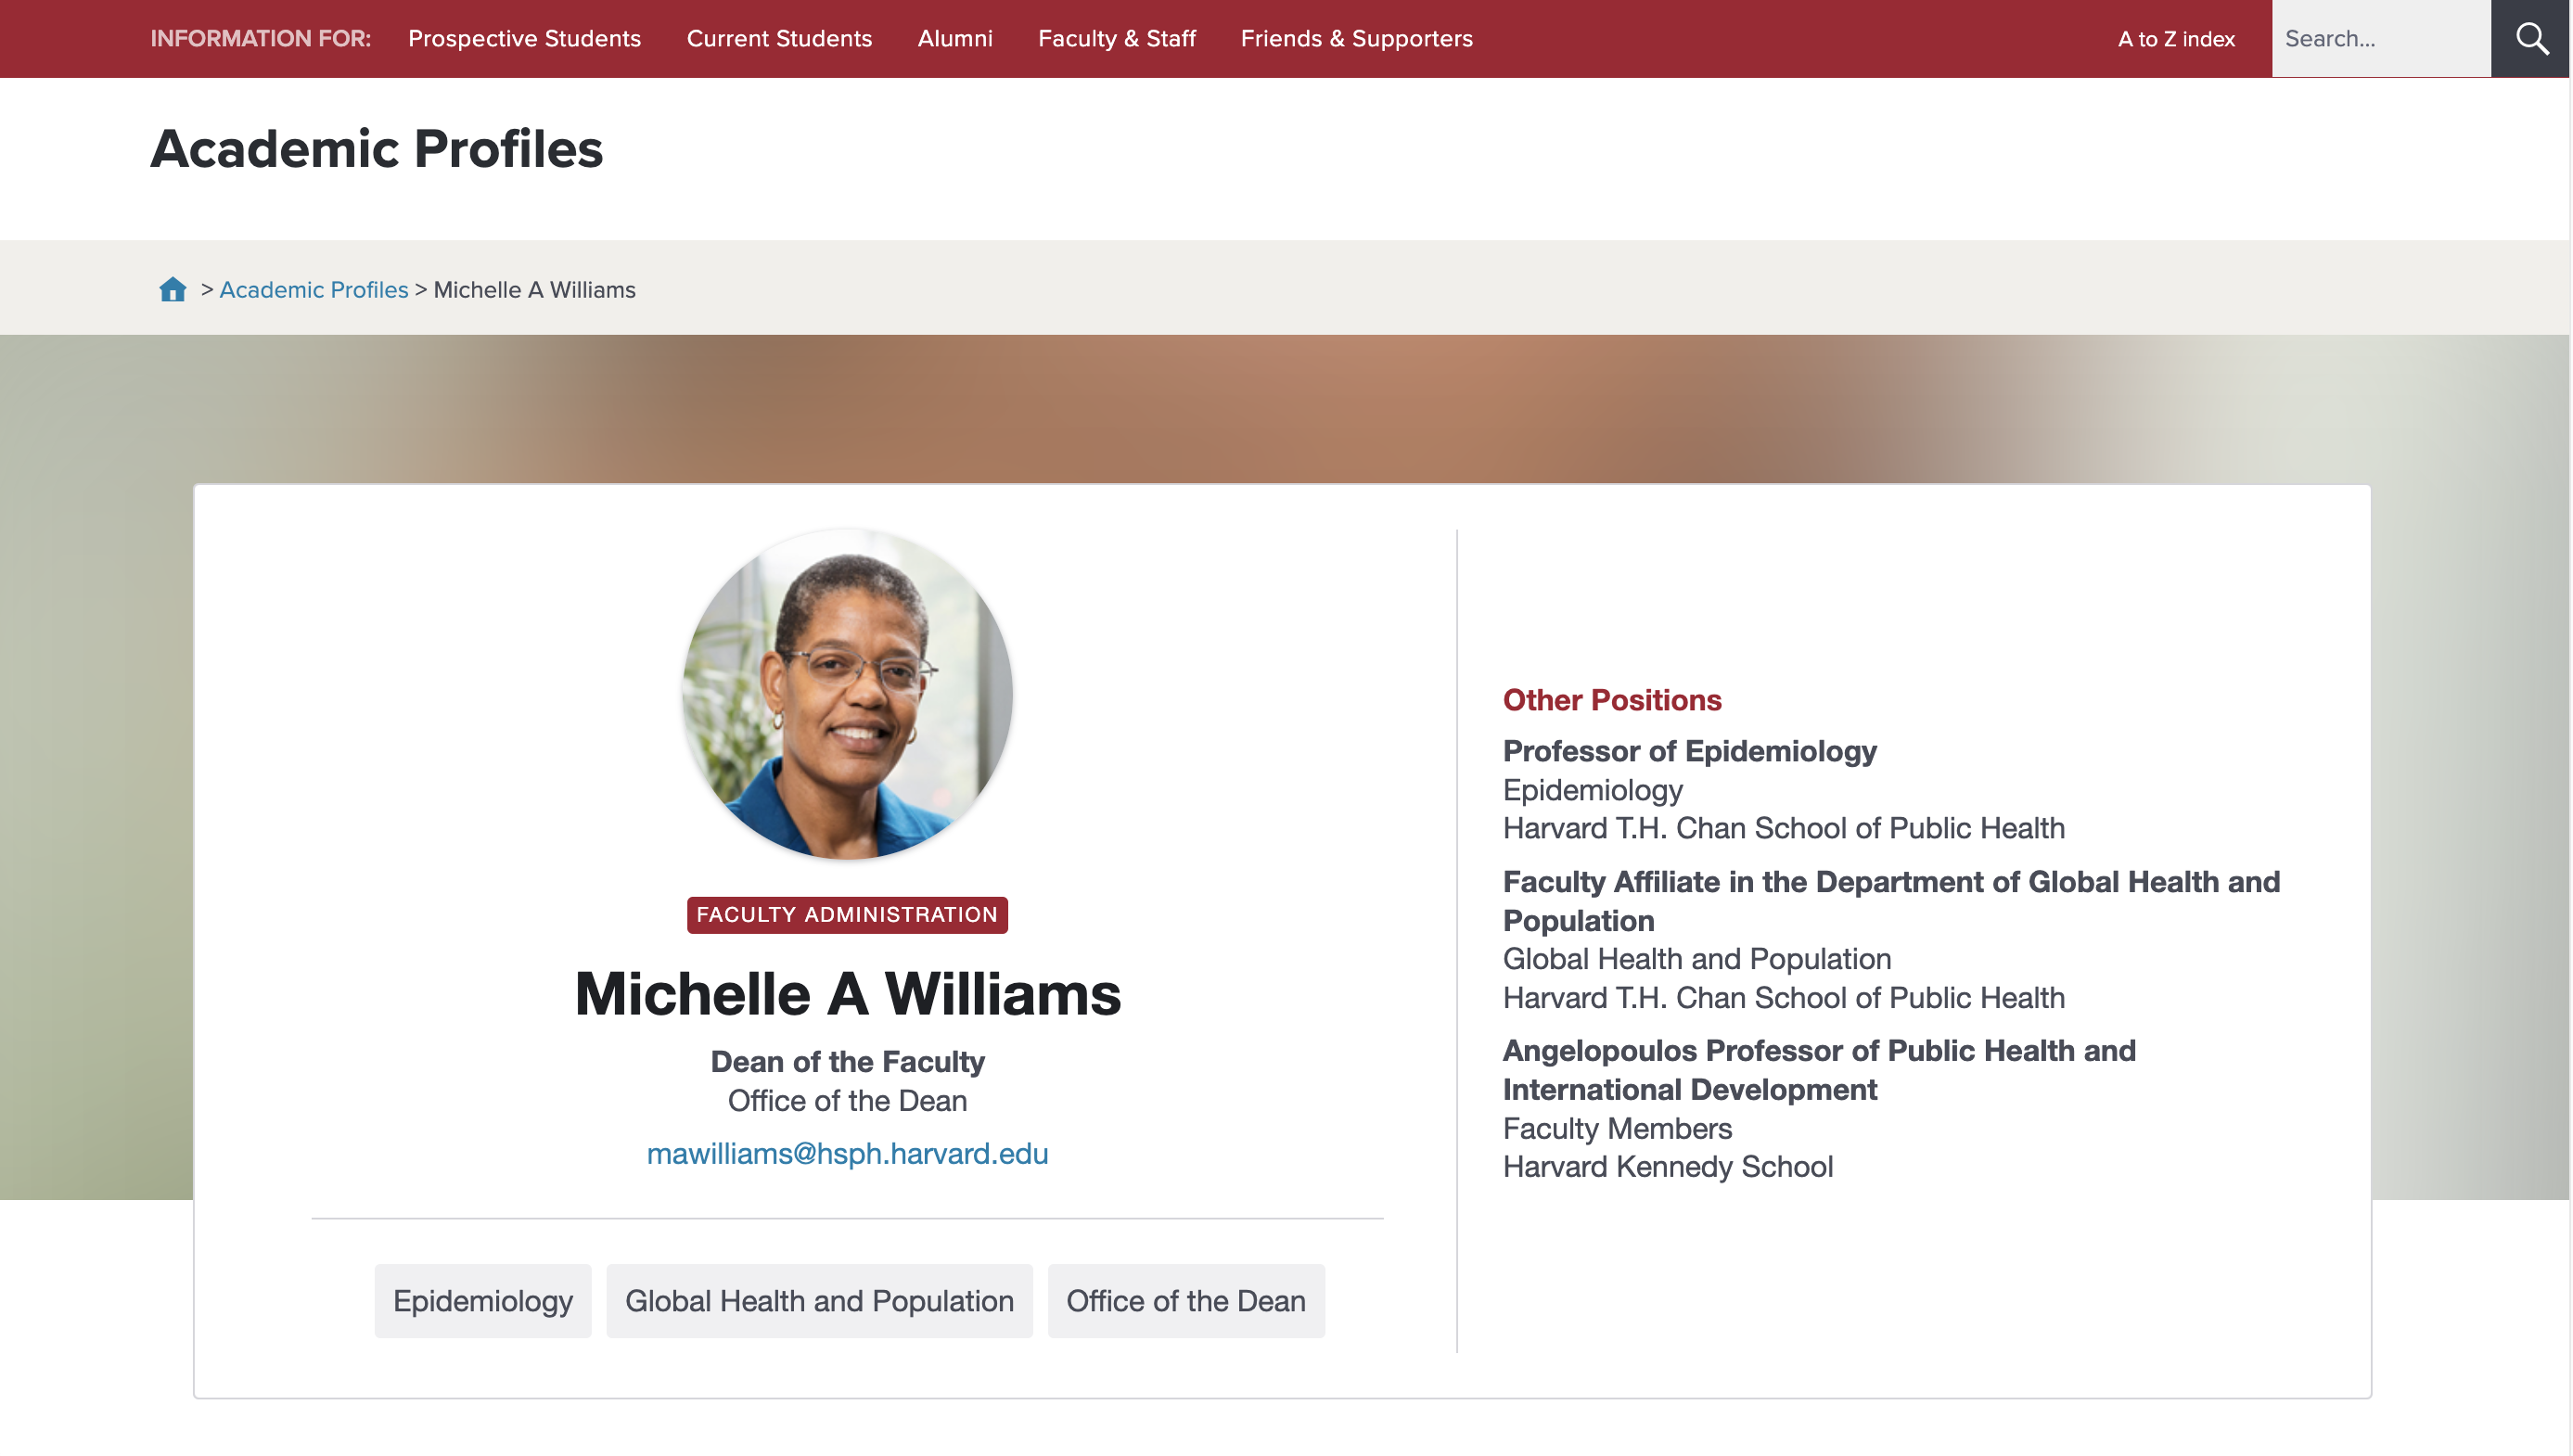 The Academic Profile of Michelle Williams